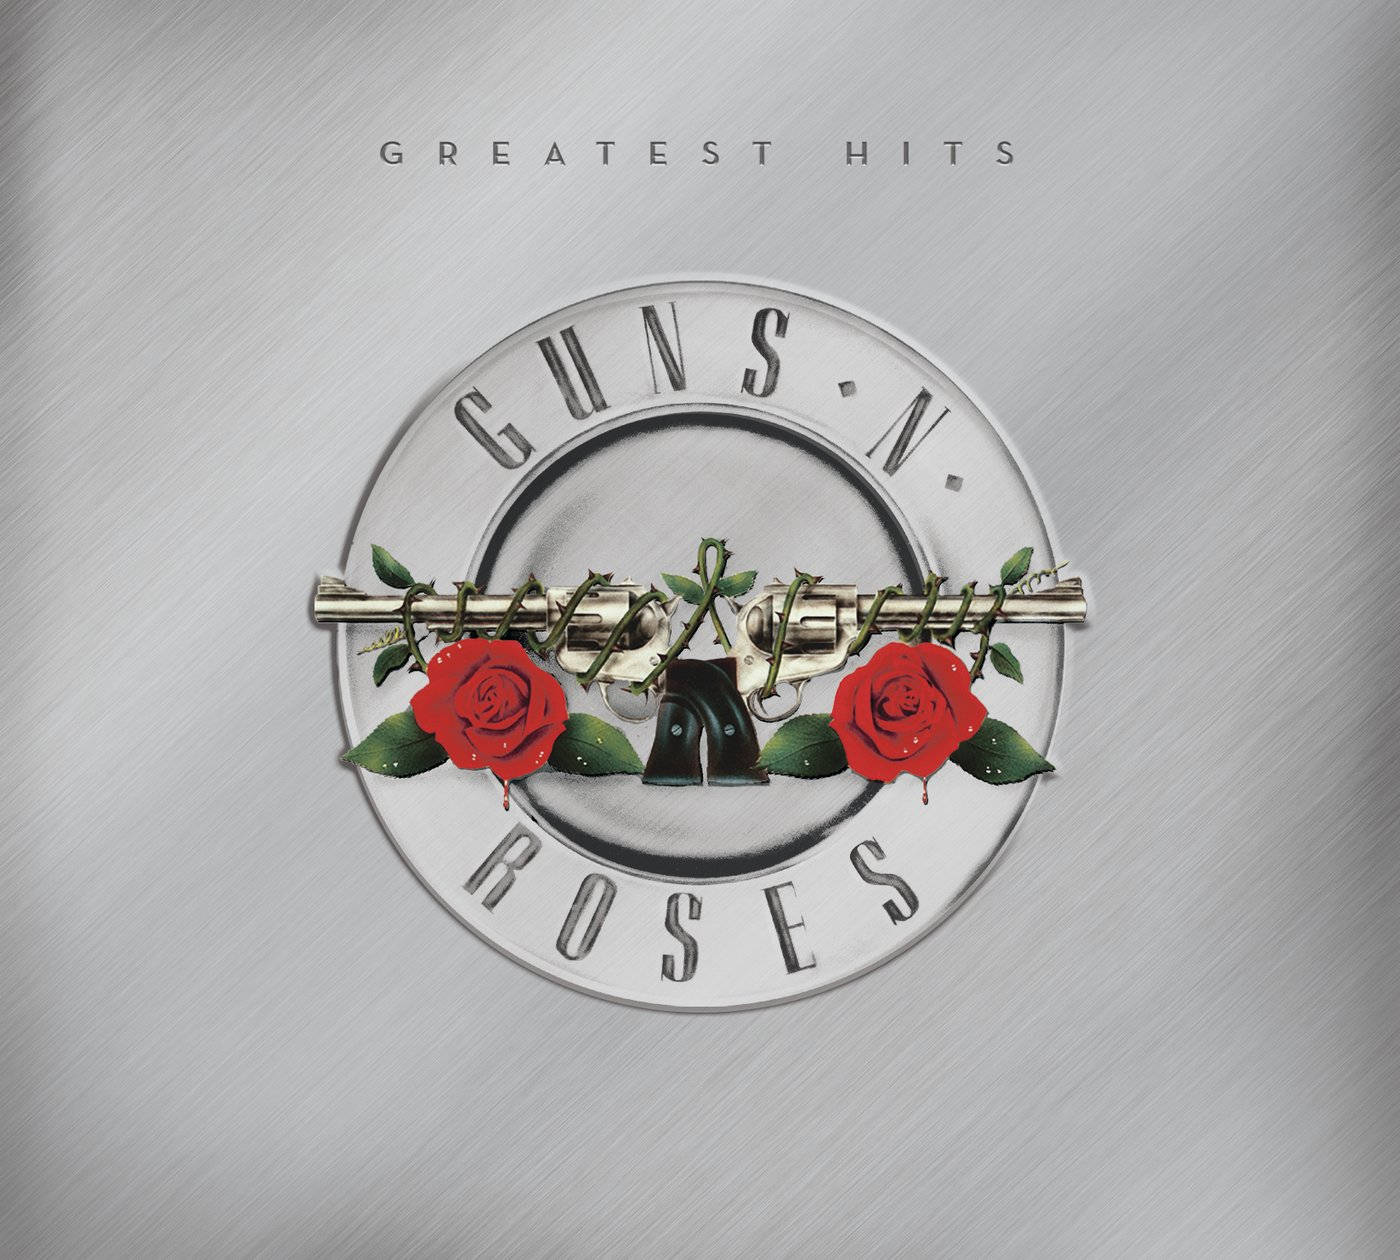 Kompilationsalbumguns N Roses Greatest Hits Wallpaper